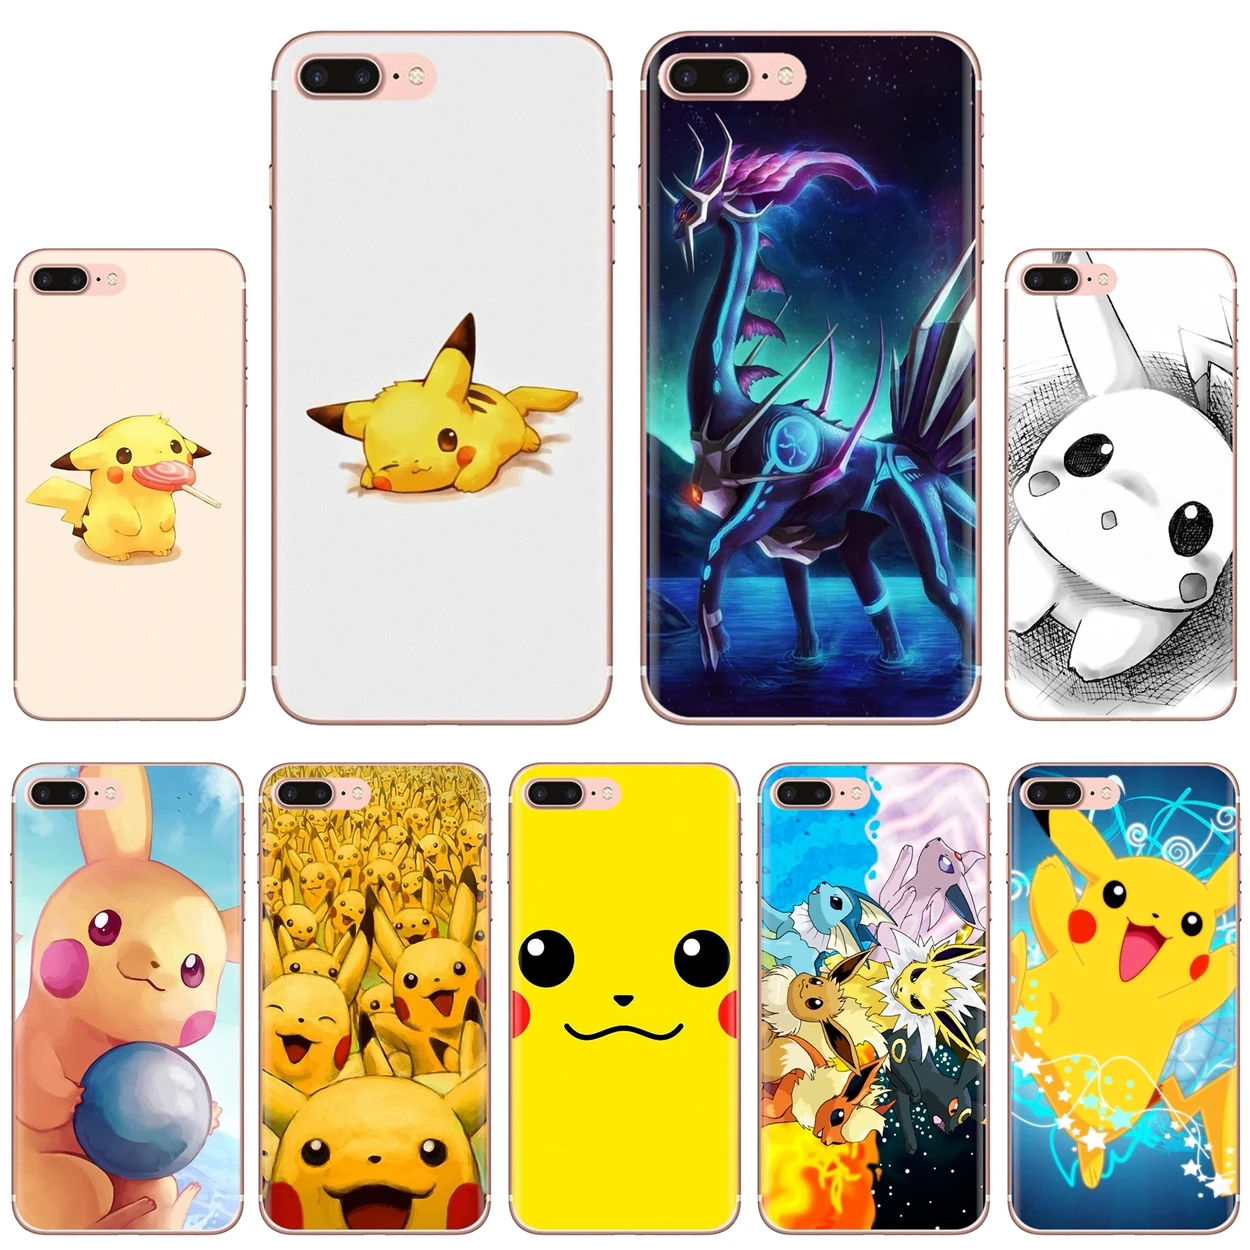 pikachu cartoon Monster Pokemon TPU Skin Cover For Samsung Galaxy Note 3 4 5 8 9 S3 S4 S5 Mini S6 S7 Edge S8 S9 S10 Plus